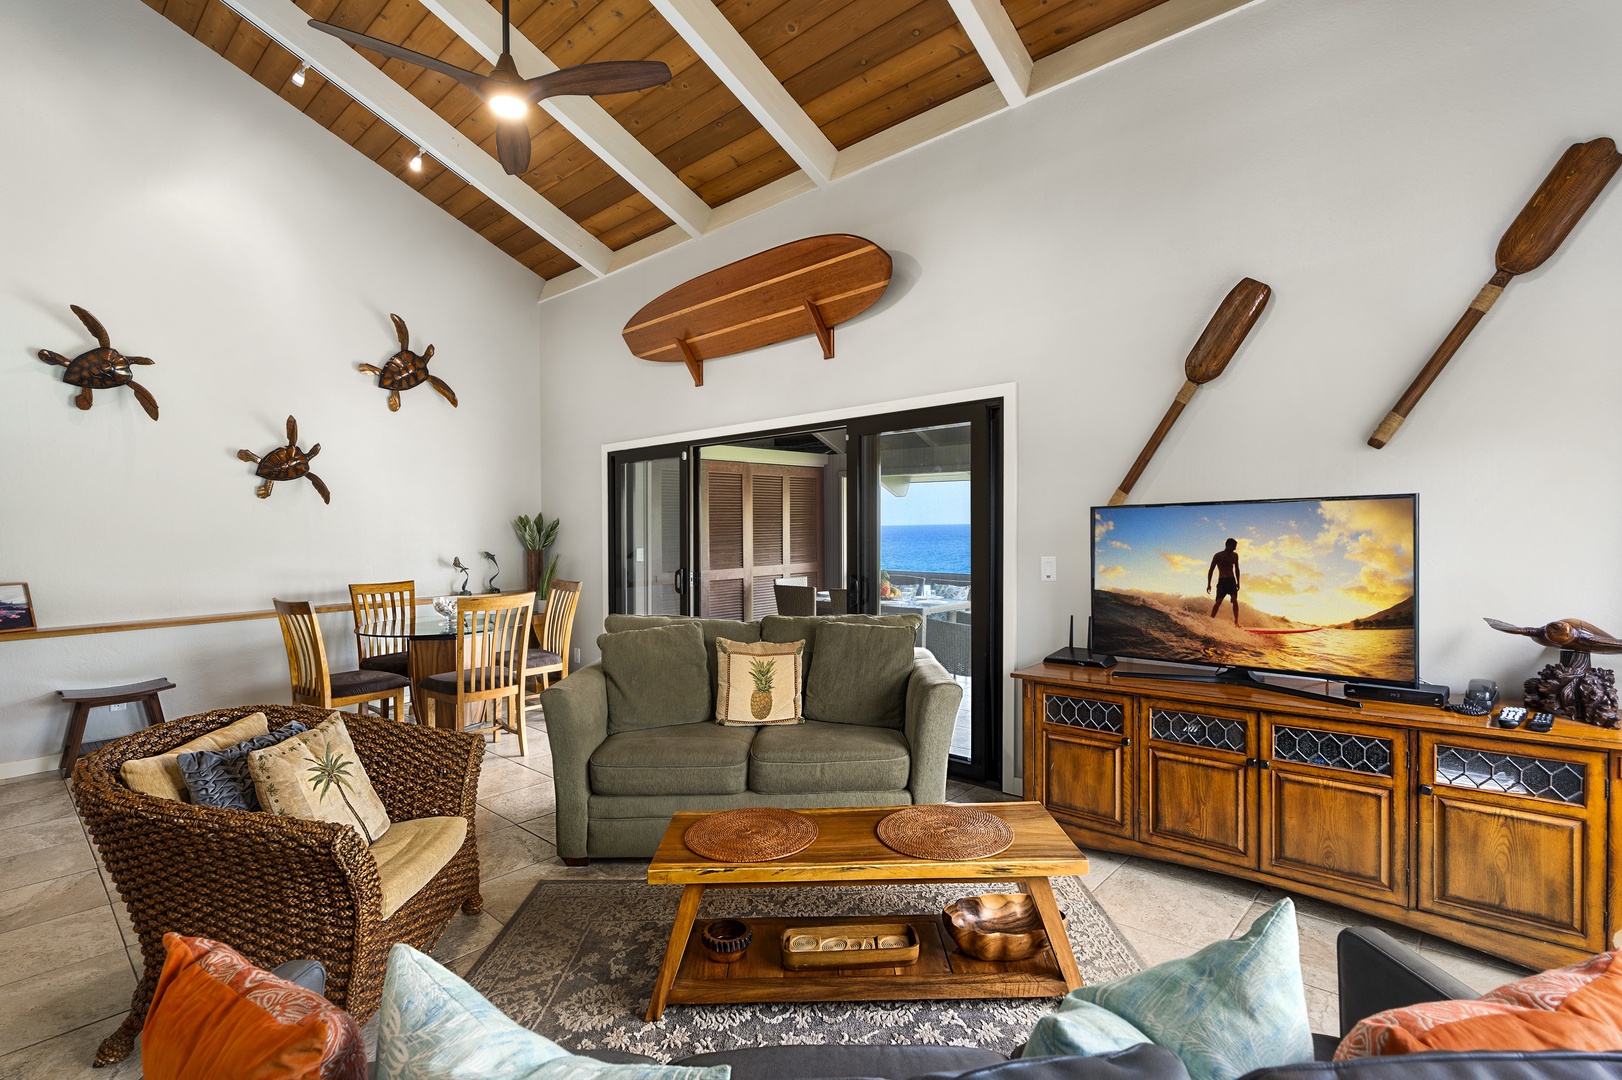 Kailua Kona Vacation Rentals, Kanaloa at Kona 1606 - Comfortable living room with vaulted ceilings!